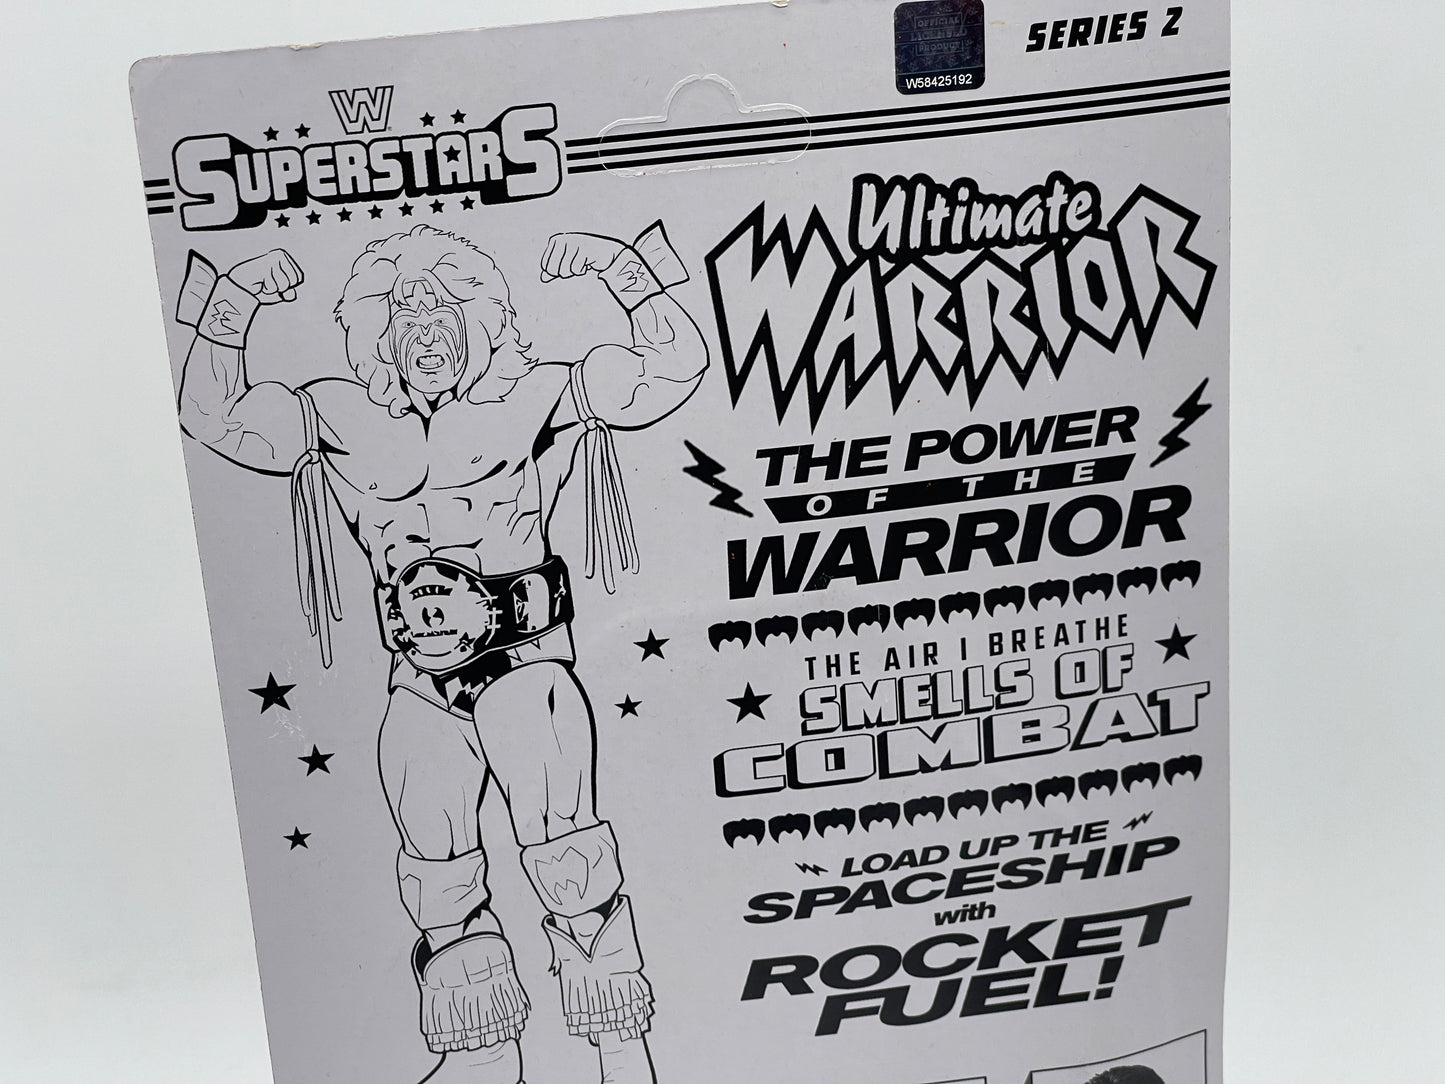 WWE Wrestling Superstars "Ultimate Warrior" Series 2 Mattel (2021) US Version